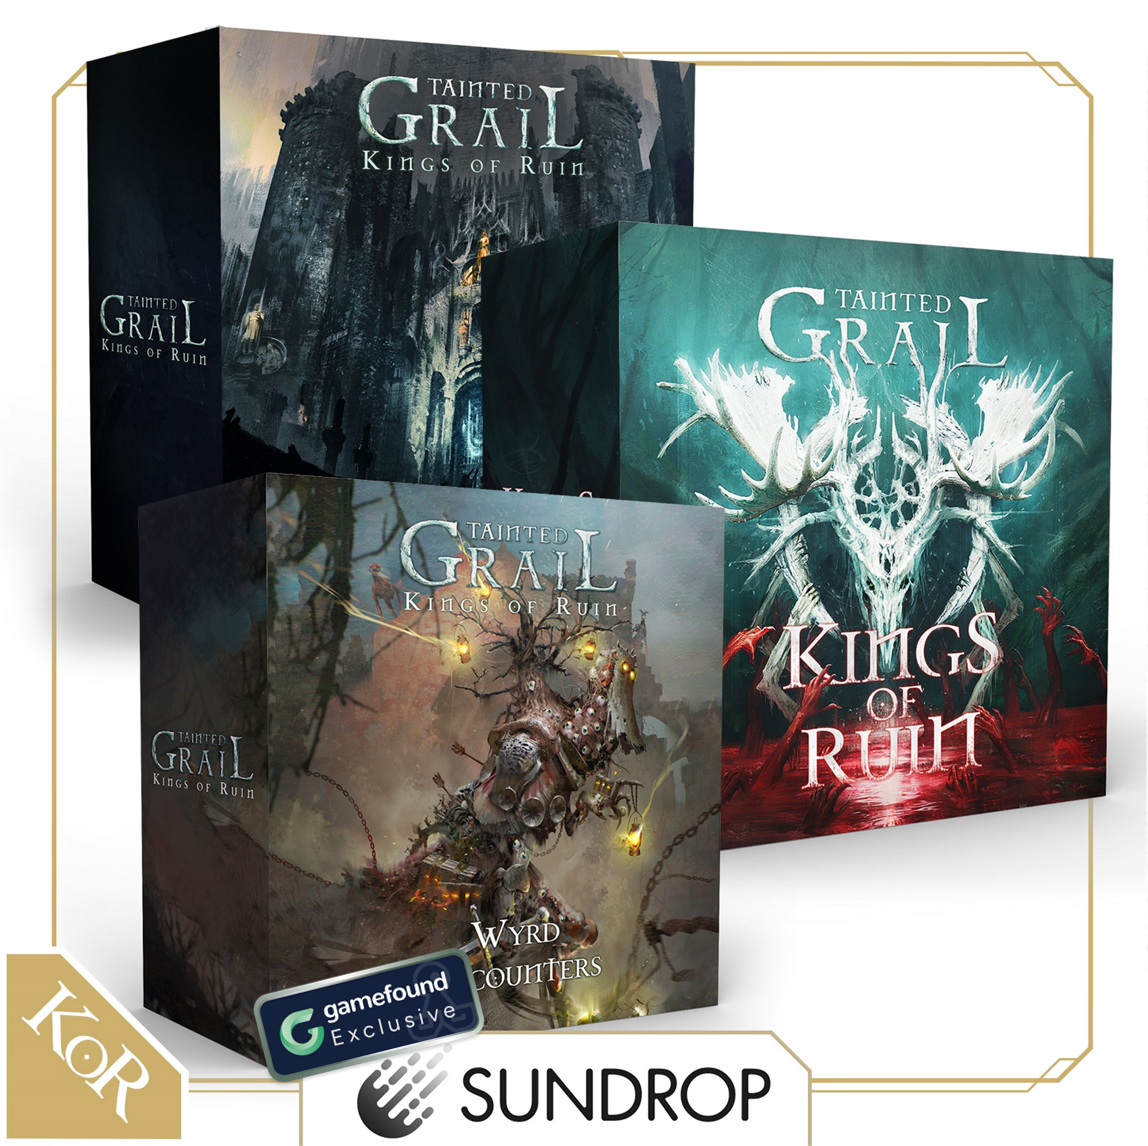 Gamefound Exclusive Tainted Grail Excalibur Pledge, Sundrop Edition